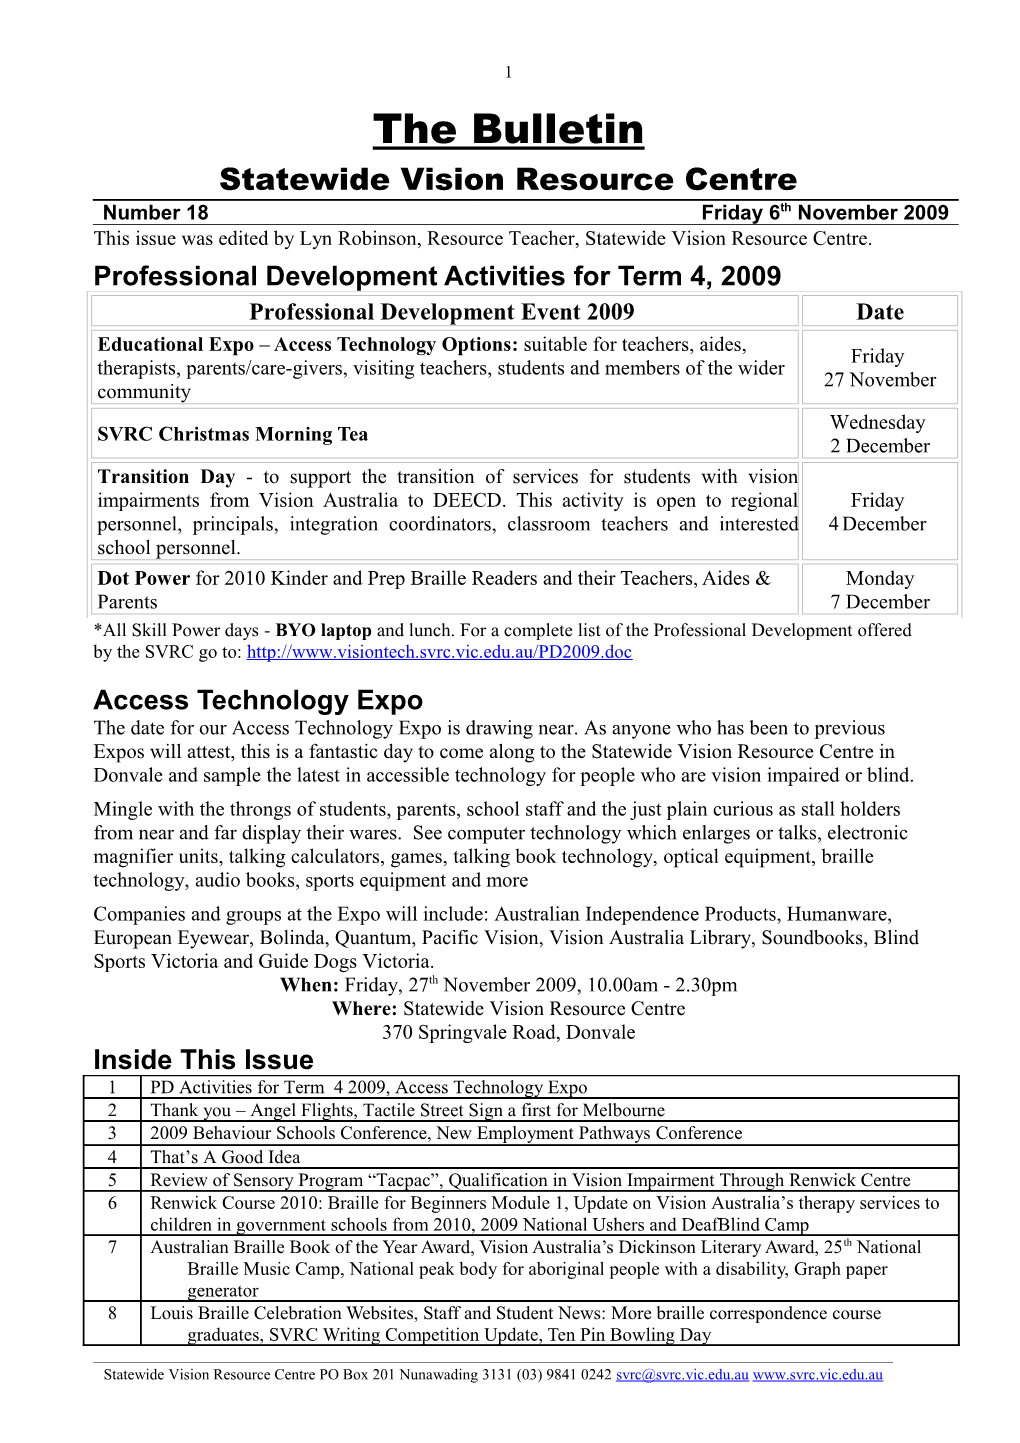 Professional Development Activities for Term 4, 2009